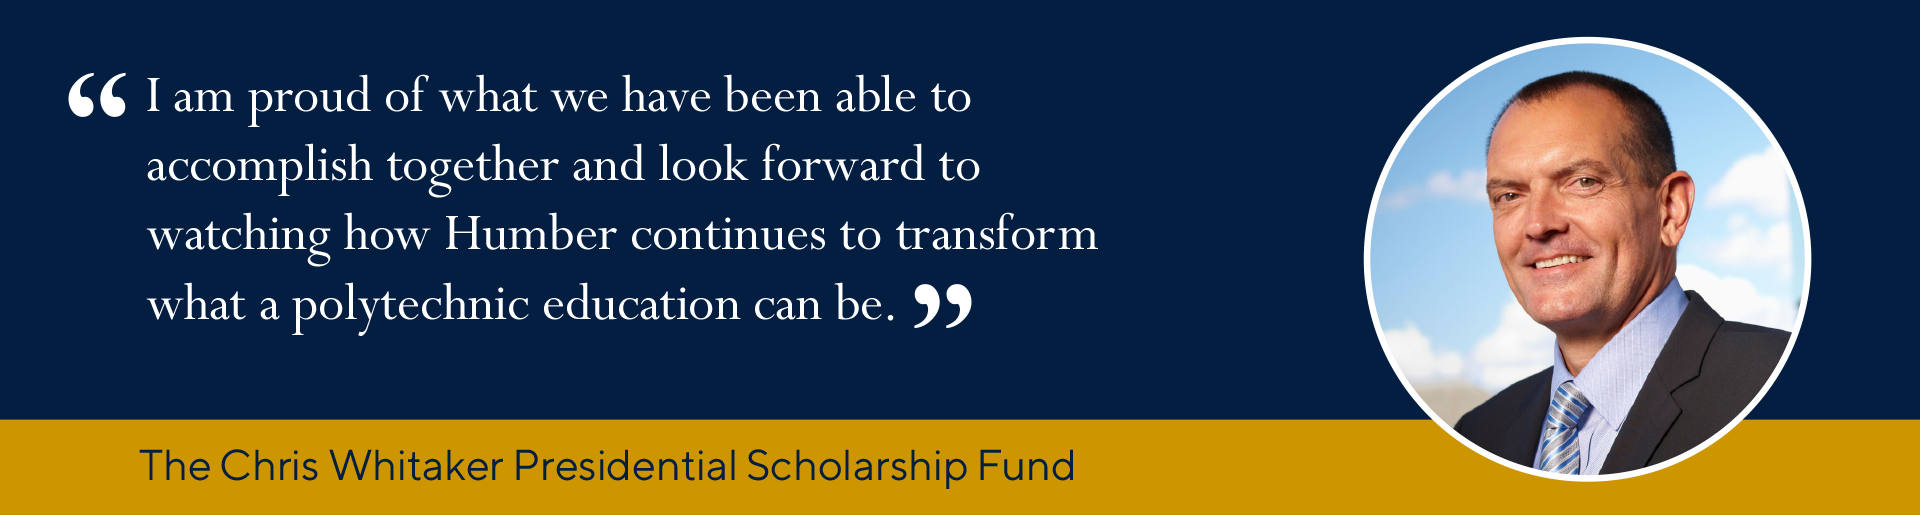 the chris whitaker presidential scholarship fund